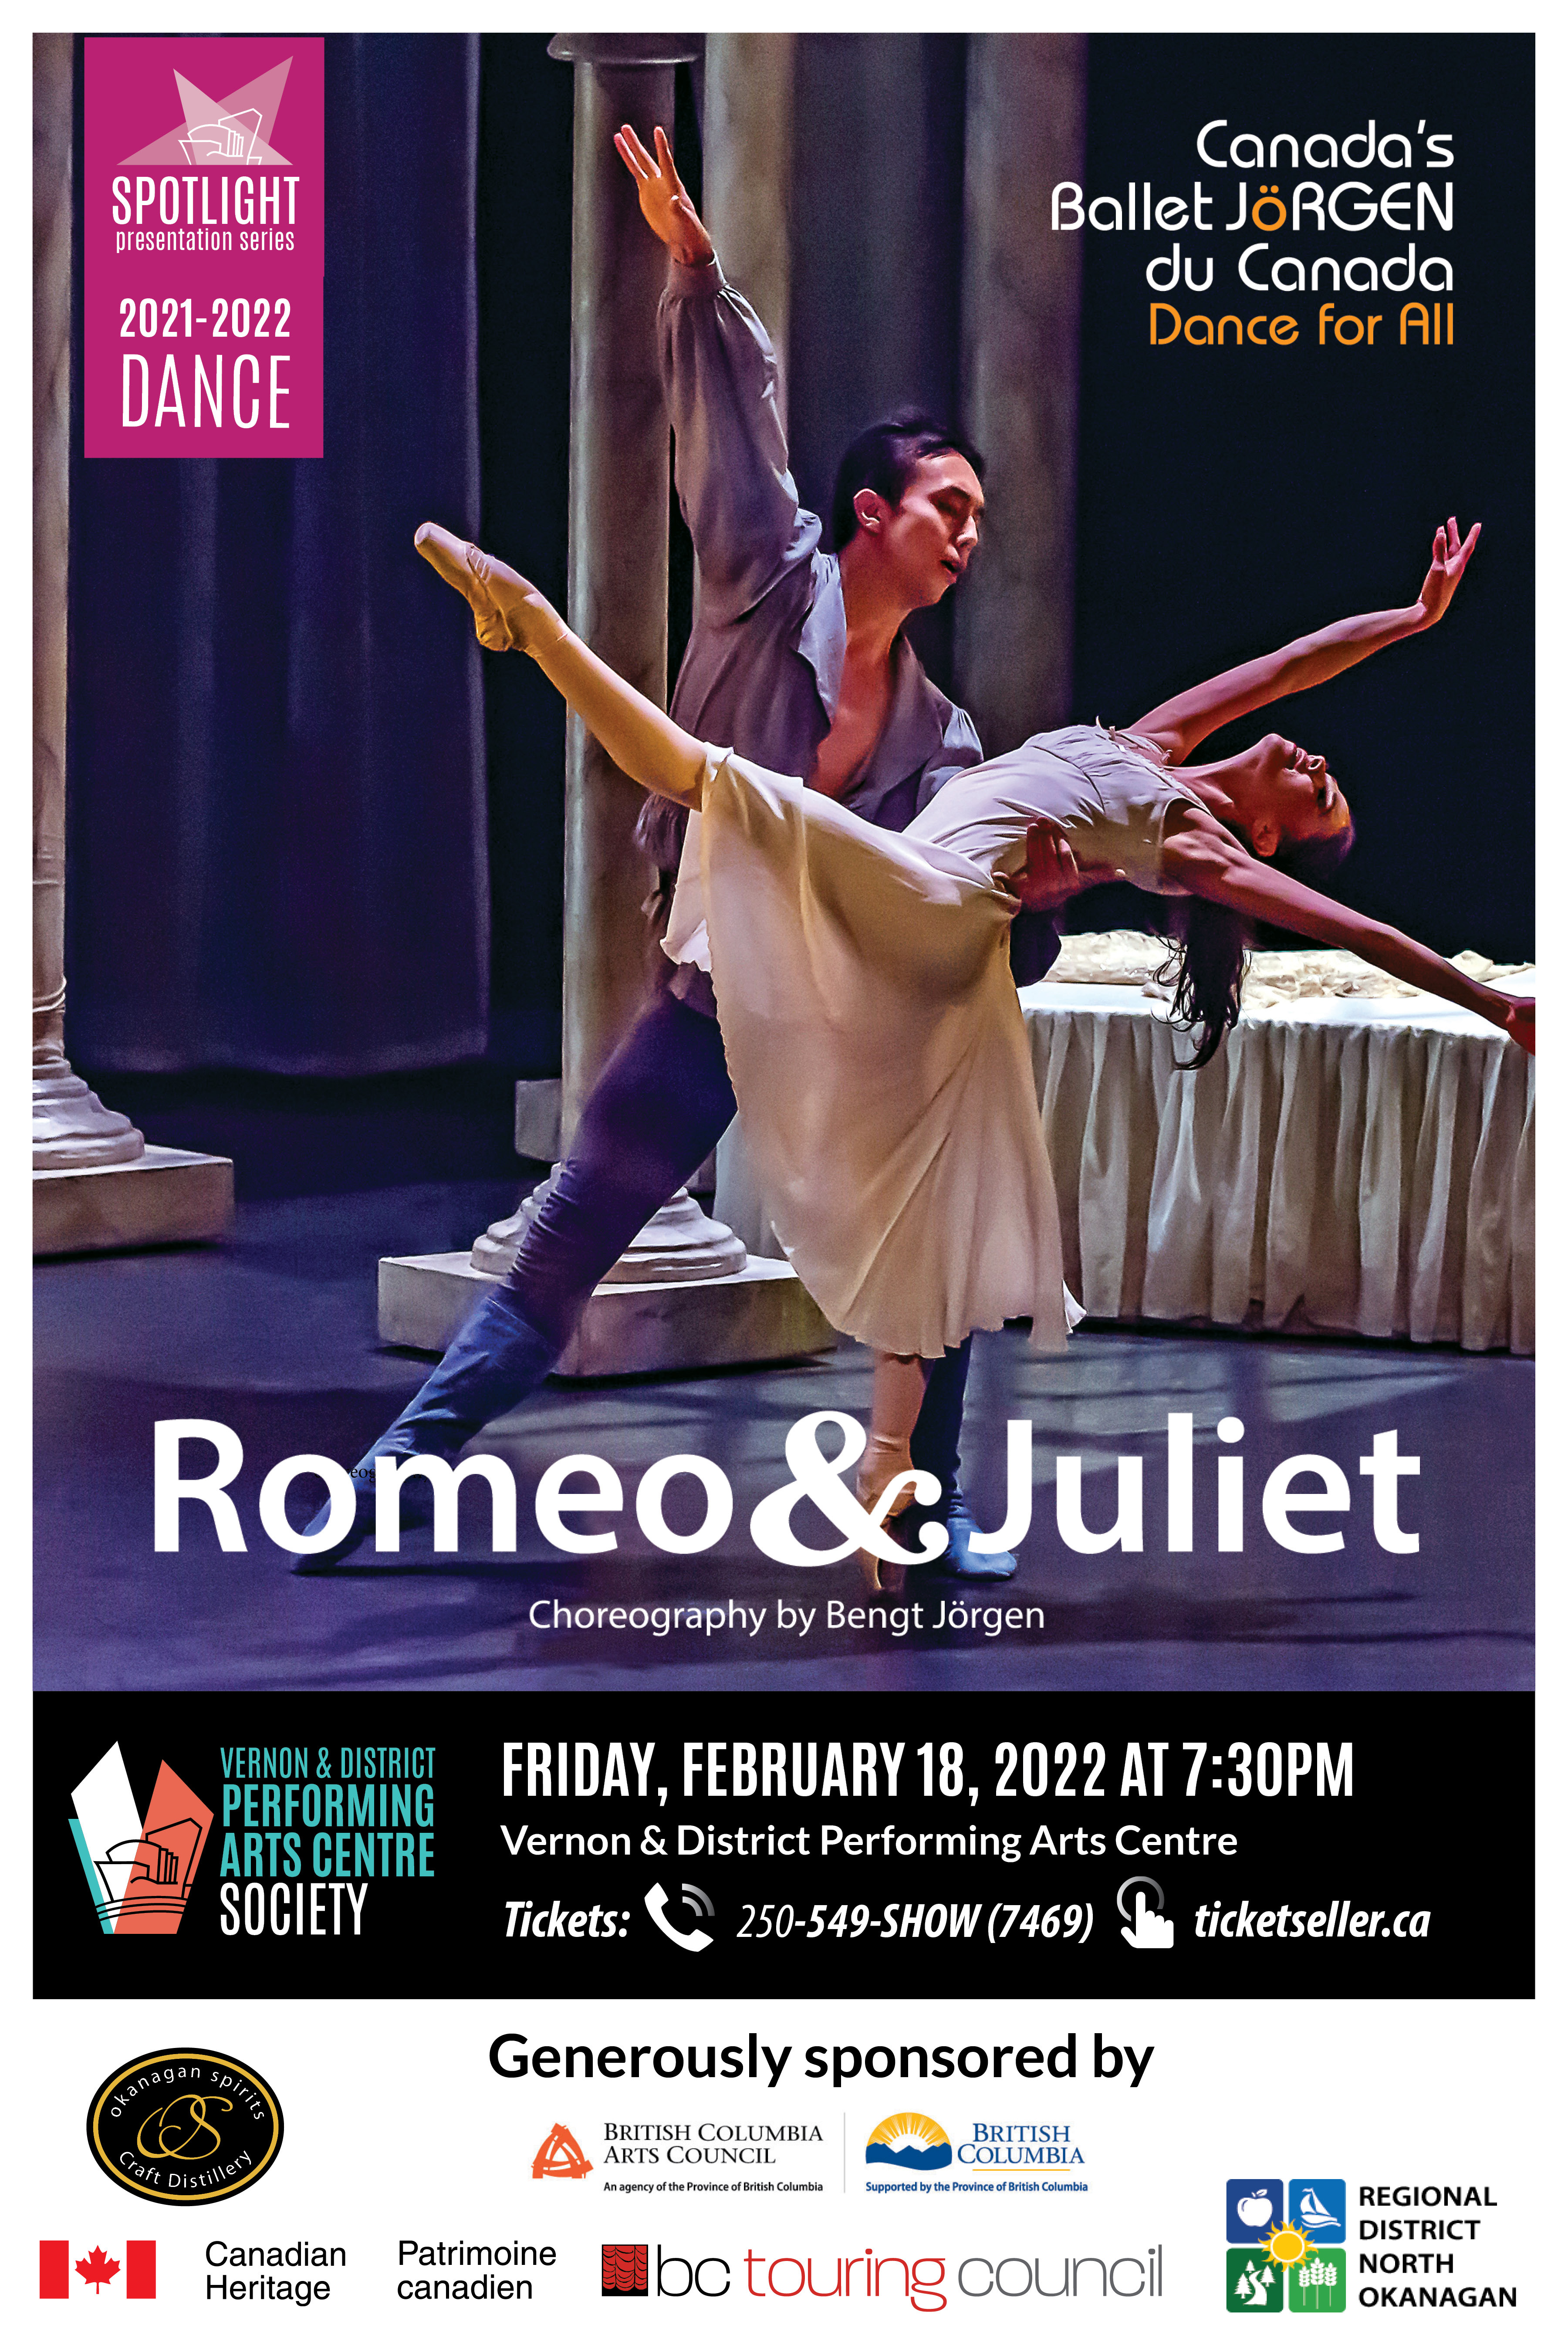 Ballet Jorgen's Romeo & Juliet